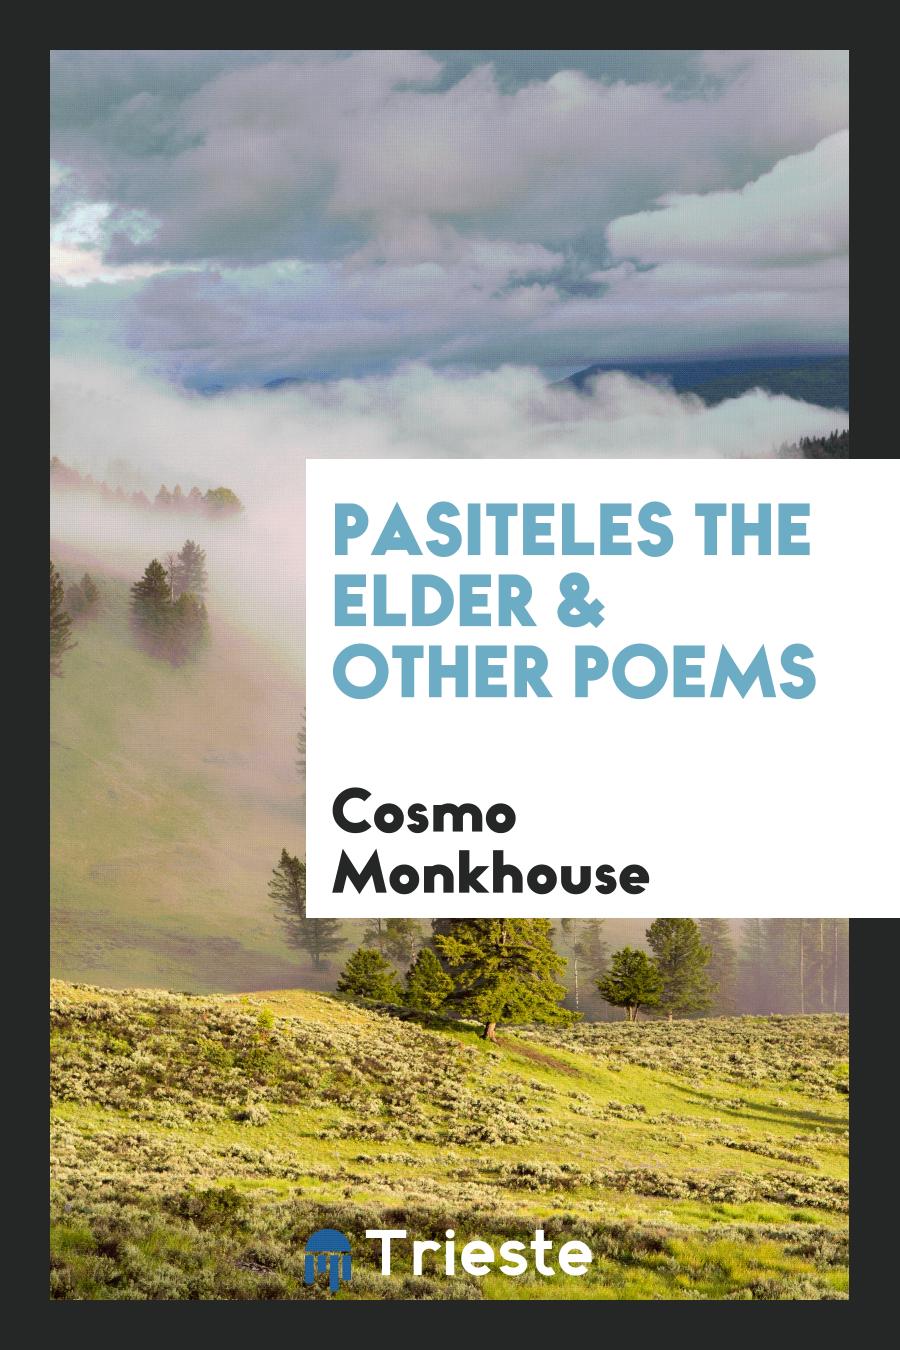 Pasiteles the Elder & Other Poems